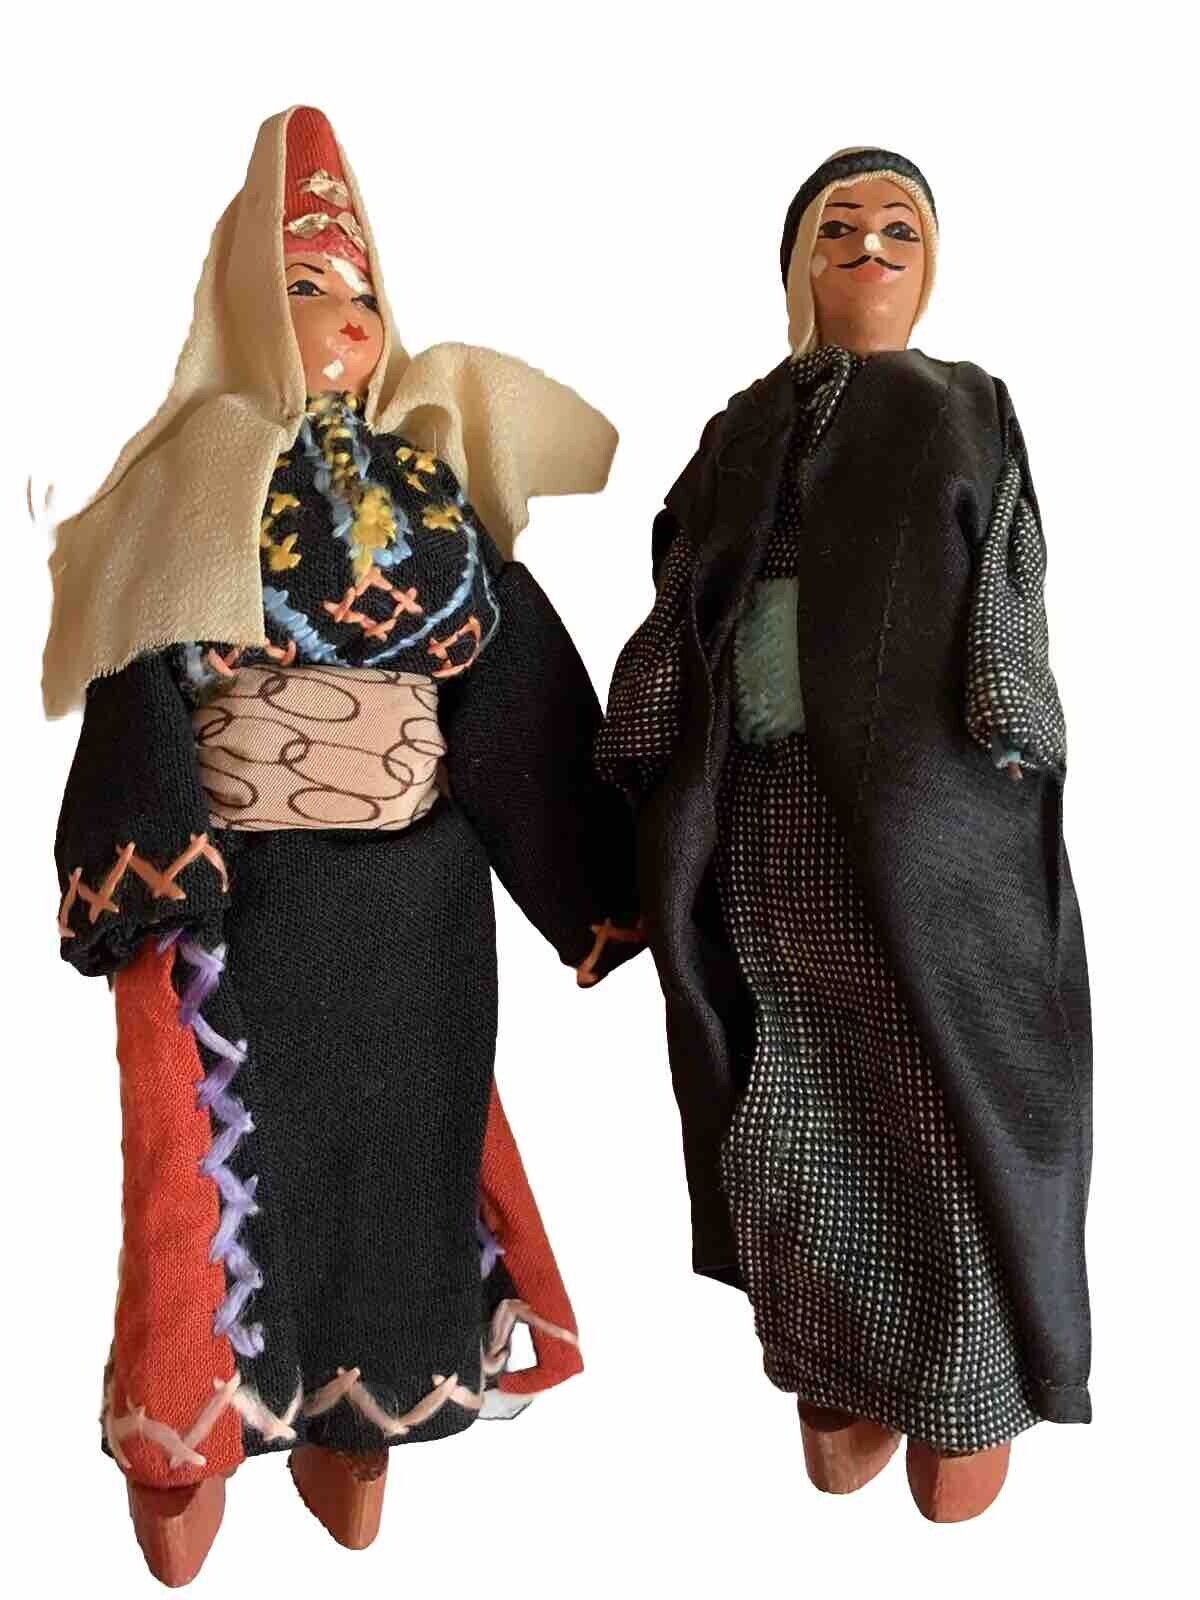 Two Vintage dolls in handmade ethnic dress